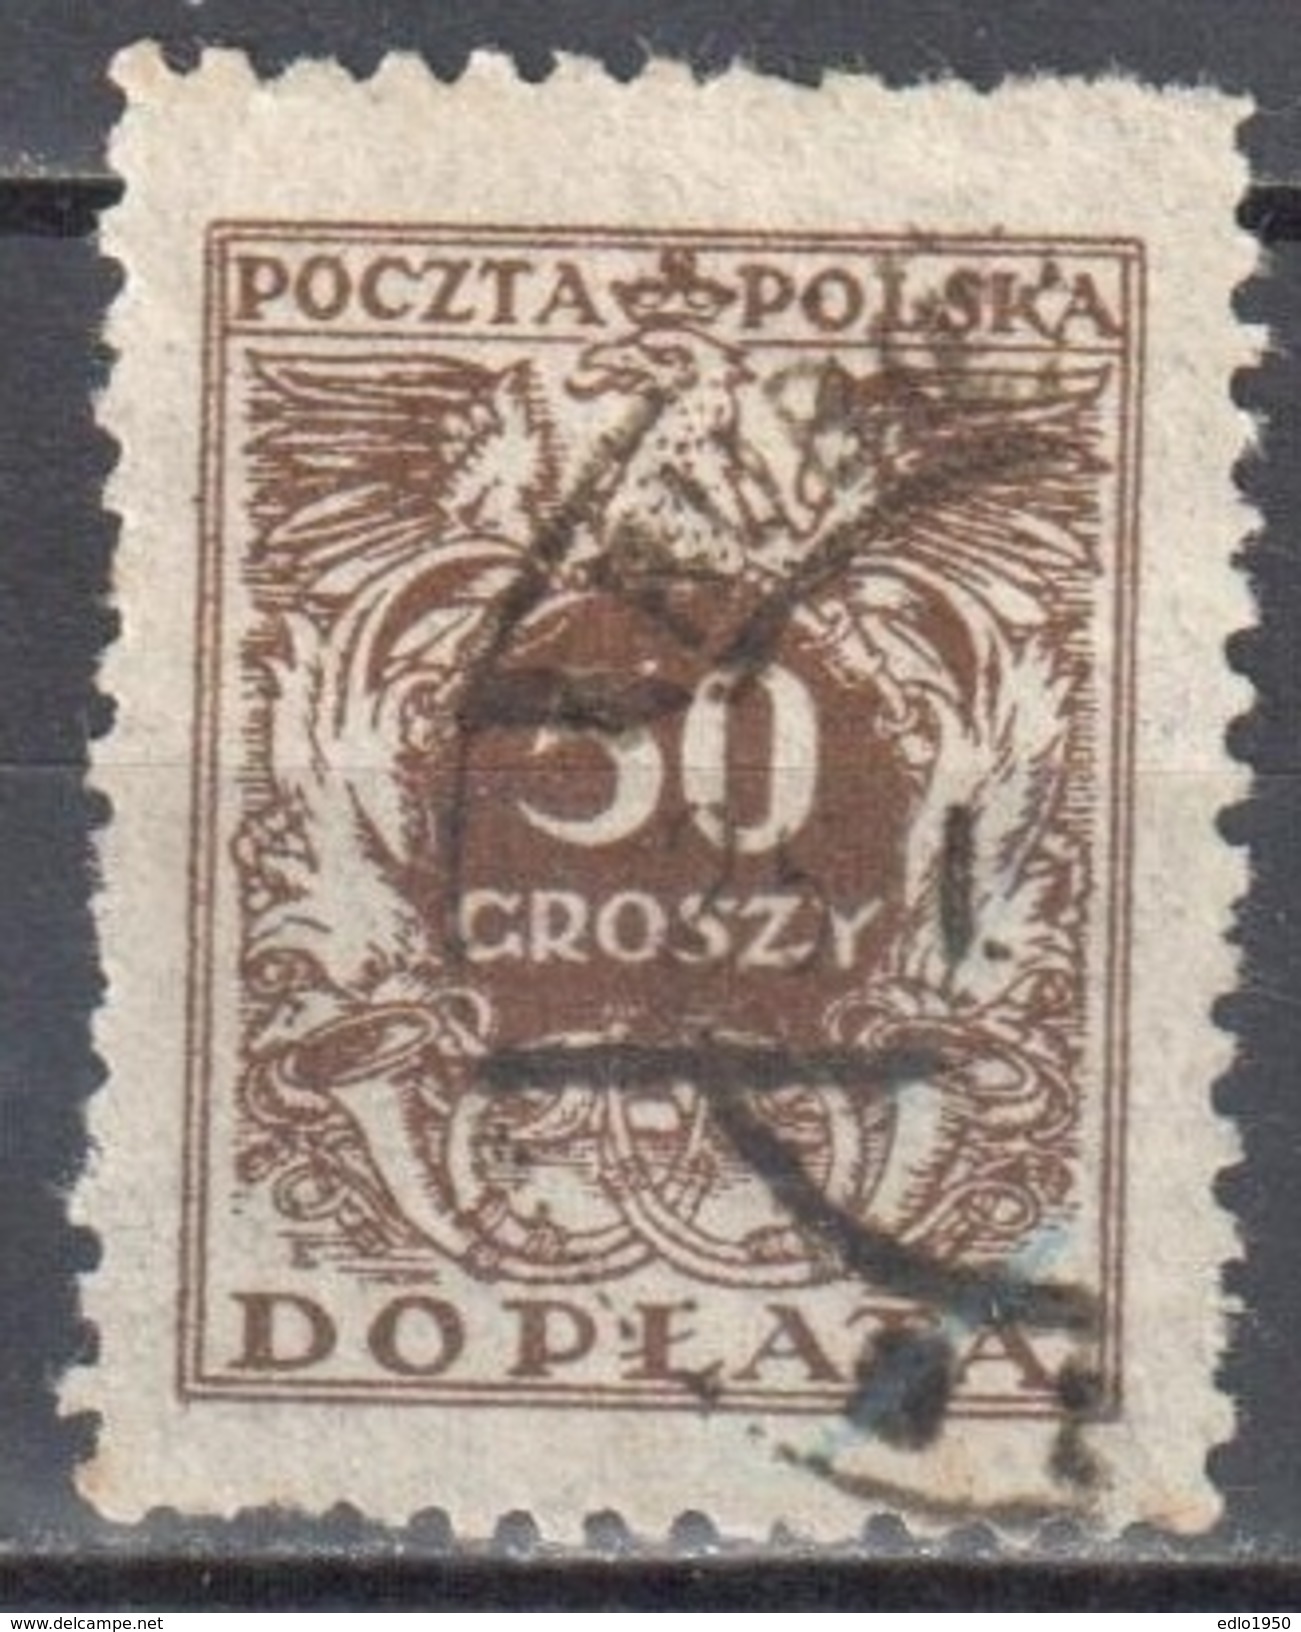 Poland 1924 - Postage Due - Mi.75 - Used - Postage Due